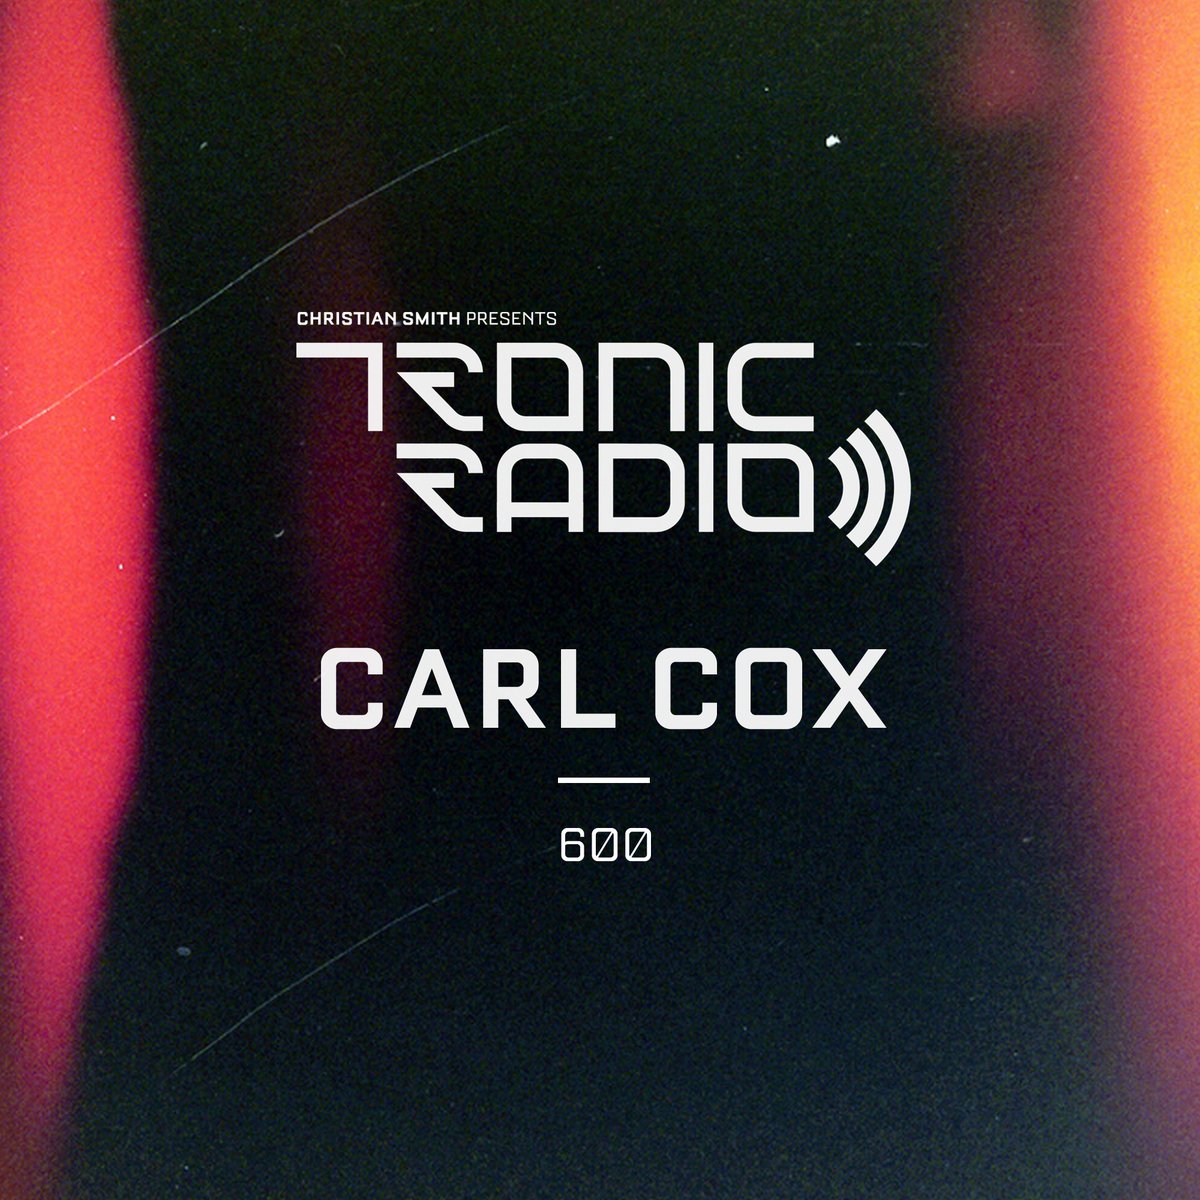 Tronic Podcast 600 with Carl Cox (Hybrid Set) soundcloud.com/christiansmith…